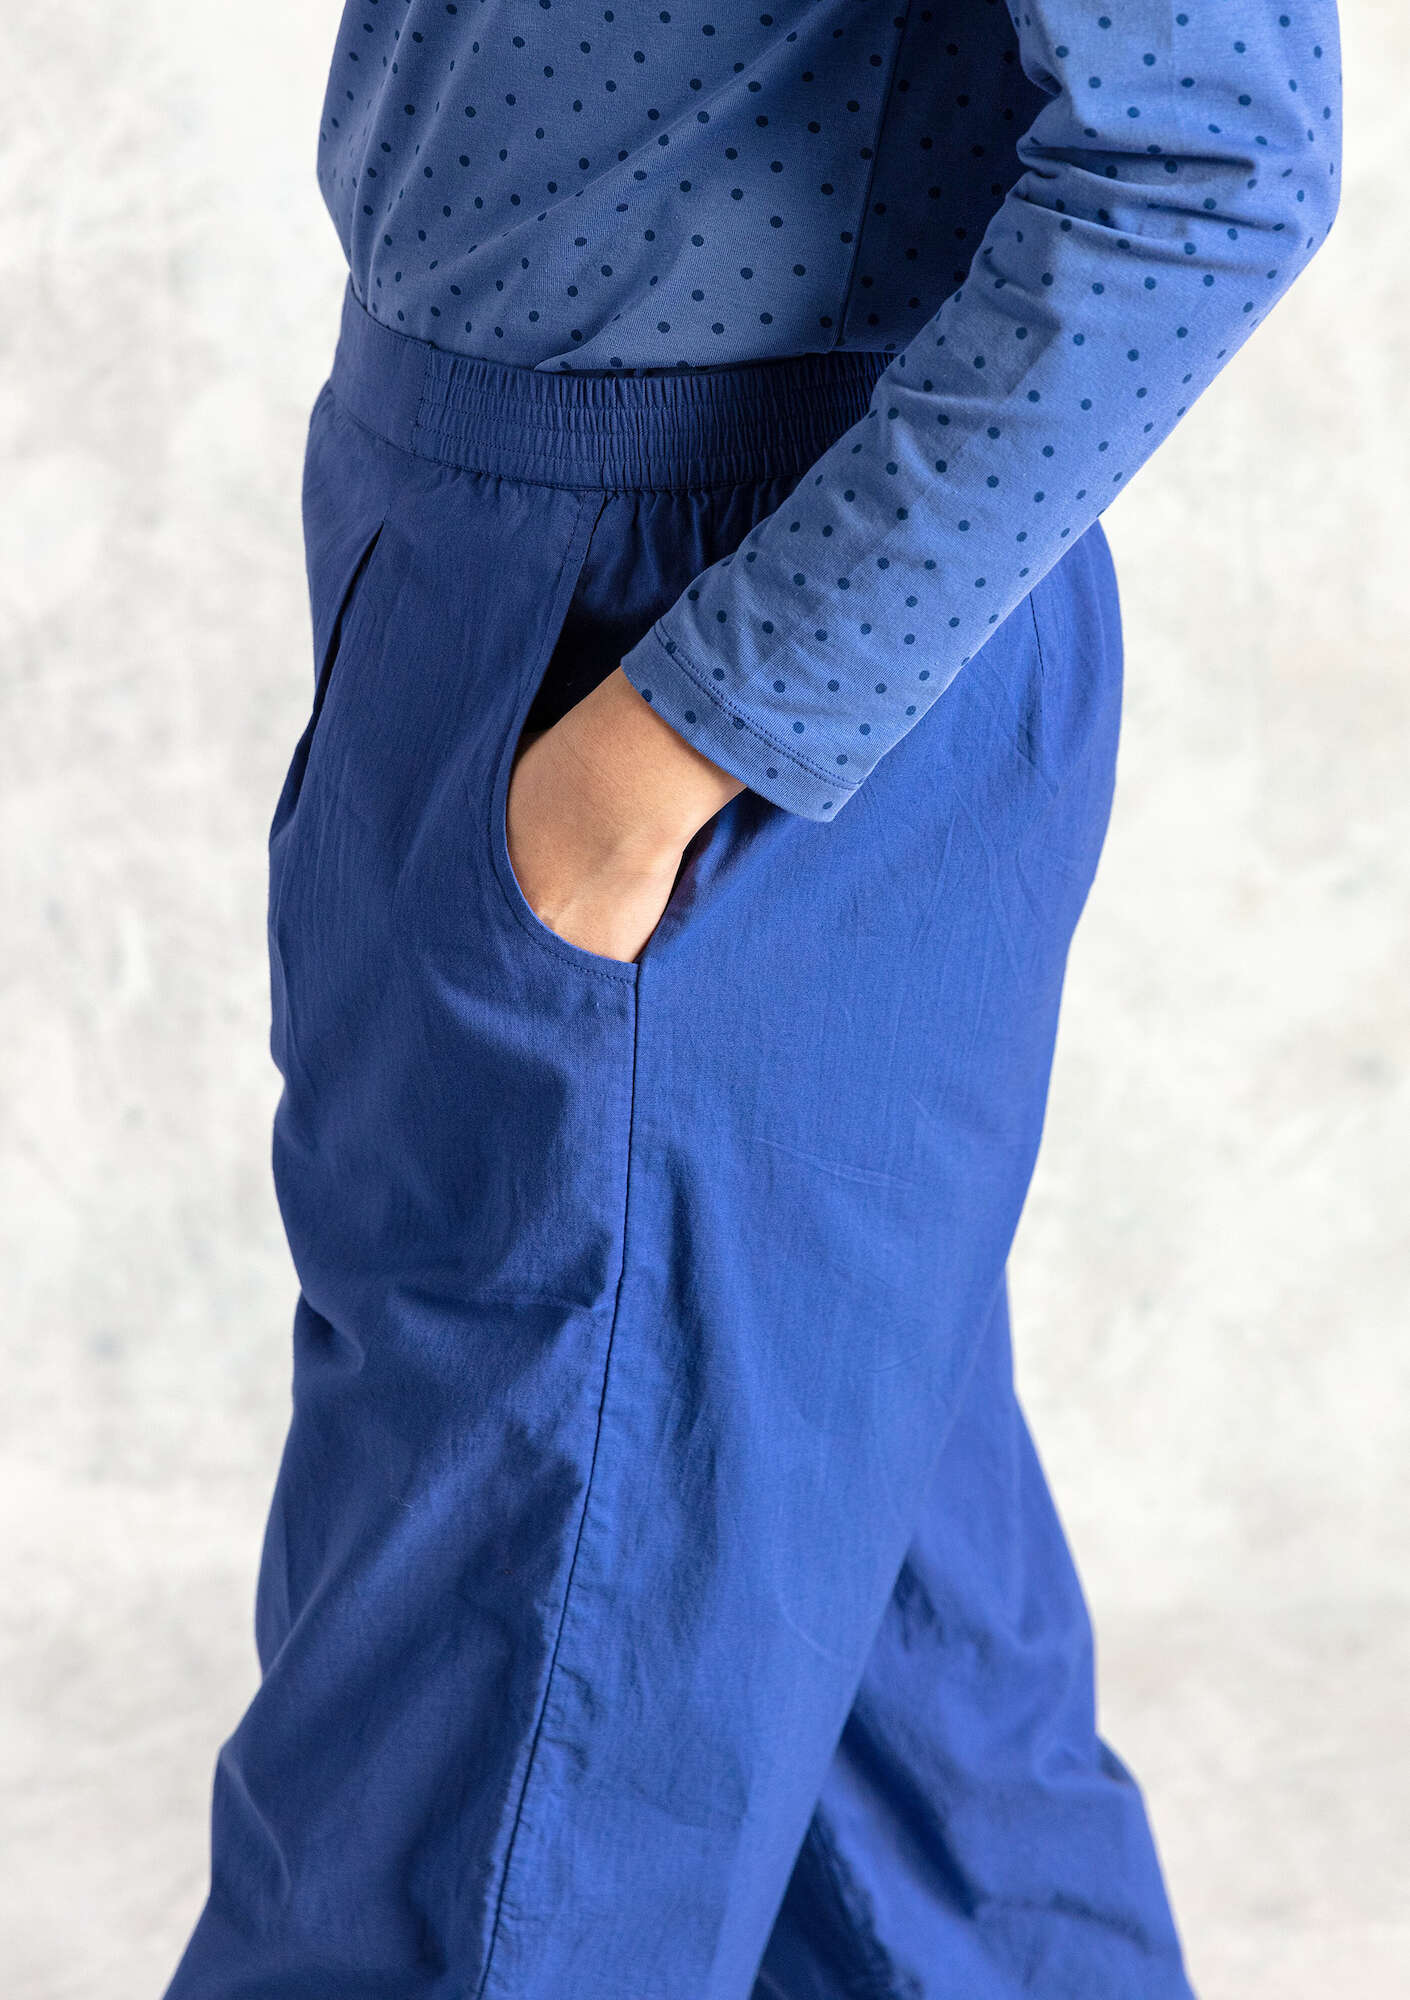 “Hi” woven pants in organic cotton dark sky blue